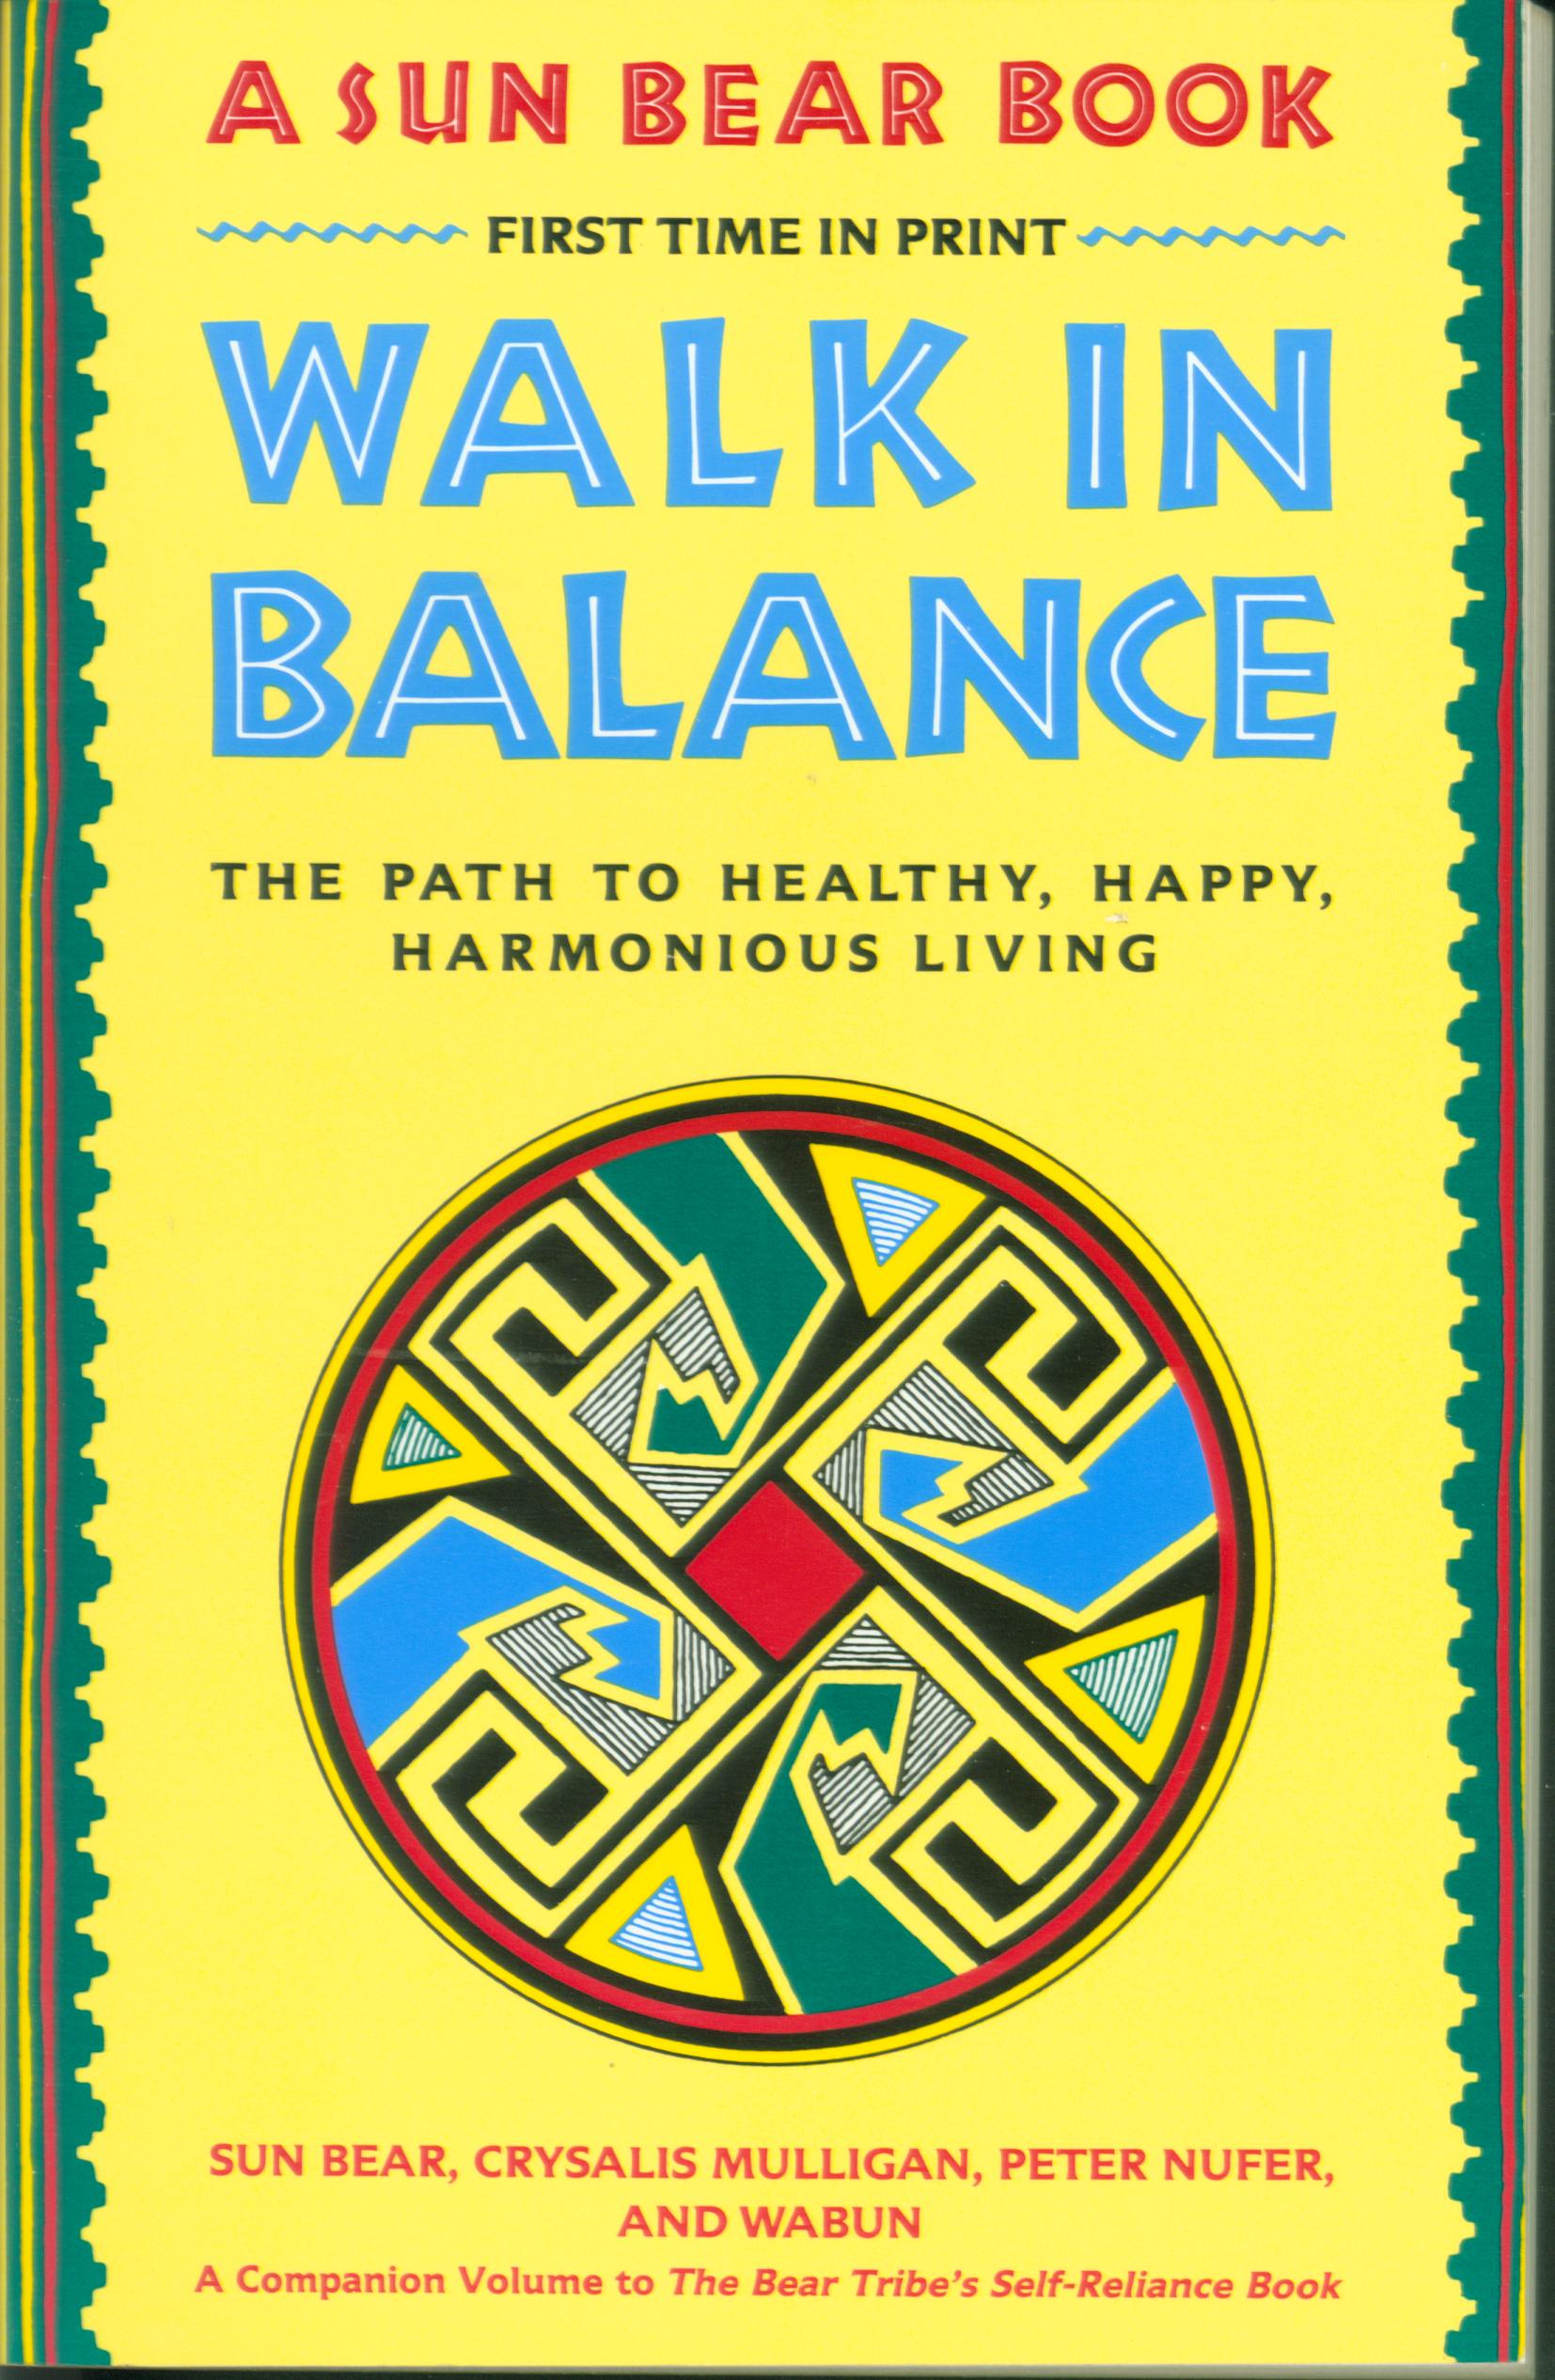 WALK IN BALANCE: the path to healthy, happy, harmonious living.